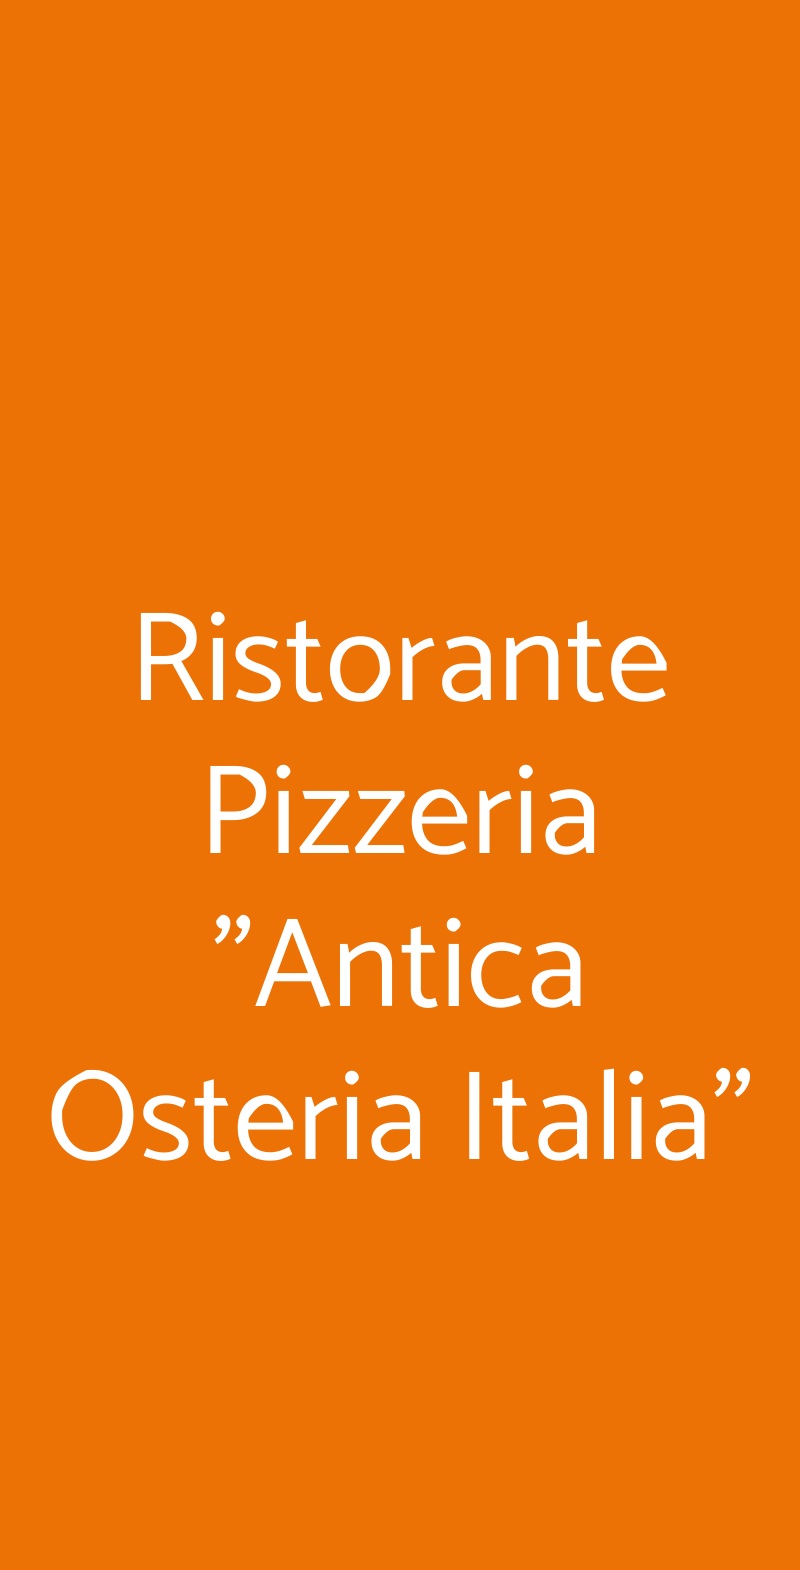 Ristorante Pizzeria "Antica Osteria Italia" Certosa di Pavia menù 1 pagina